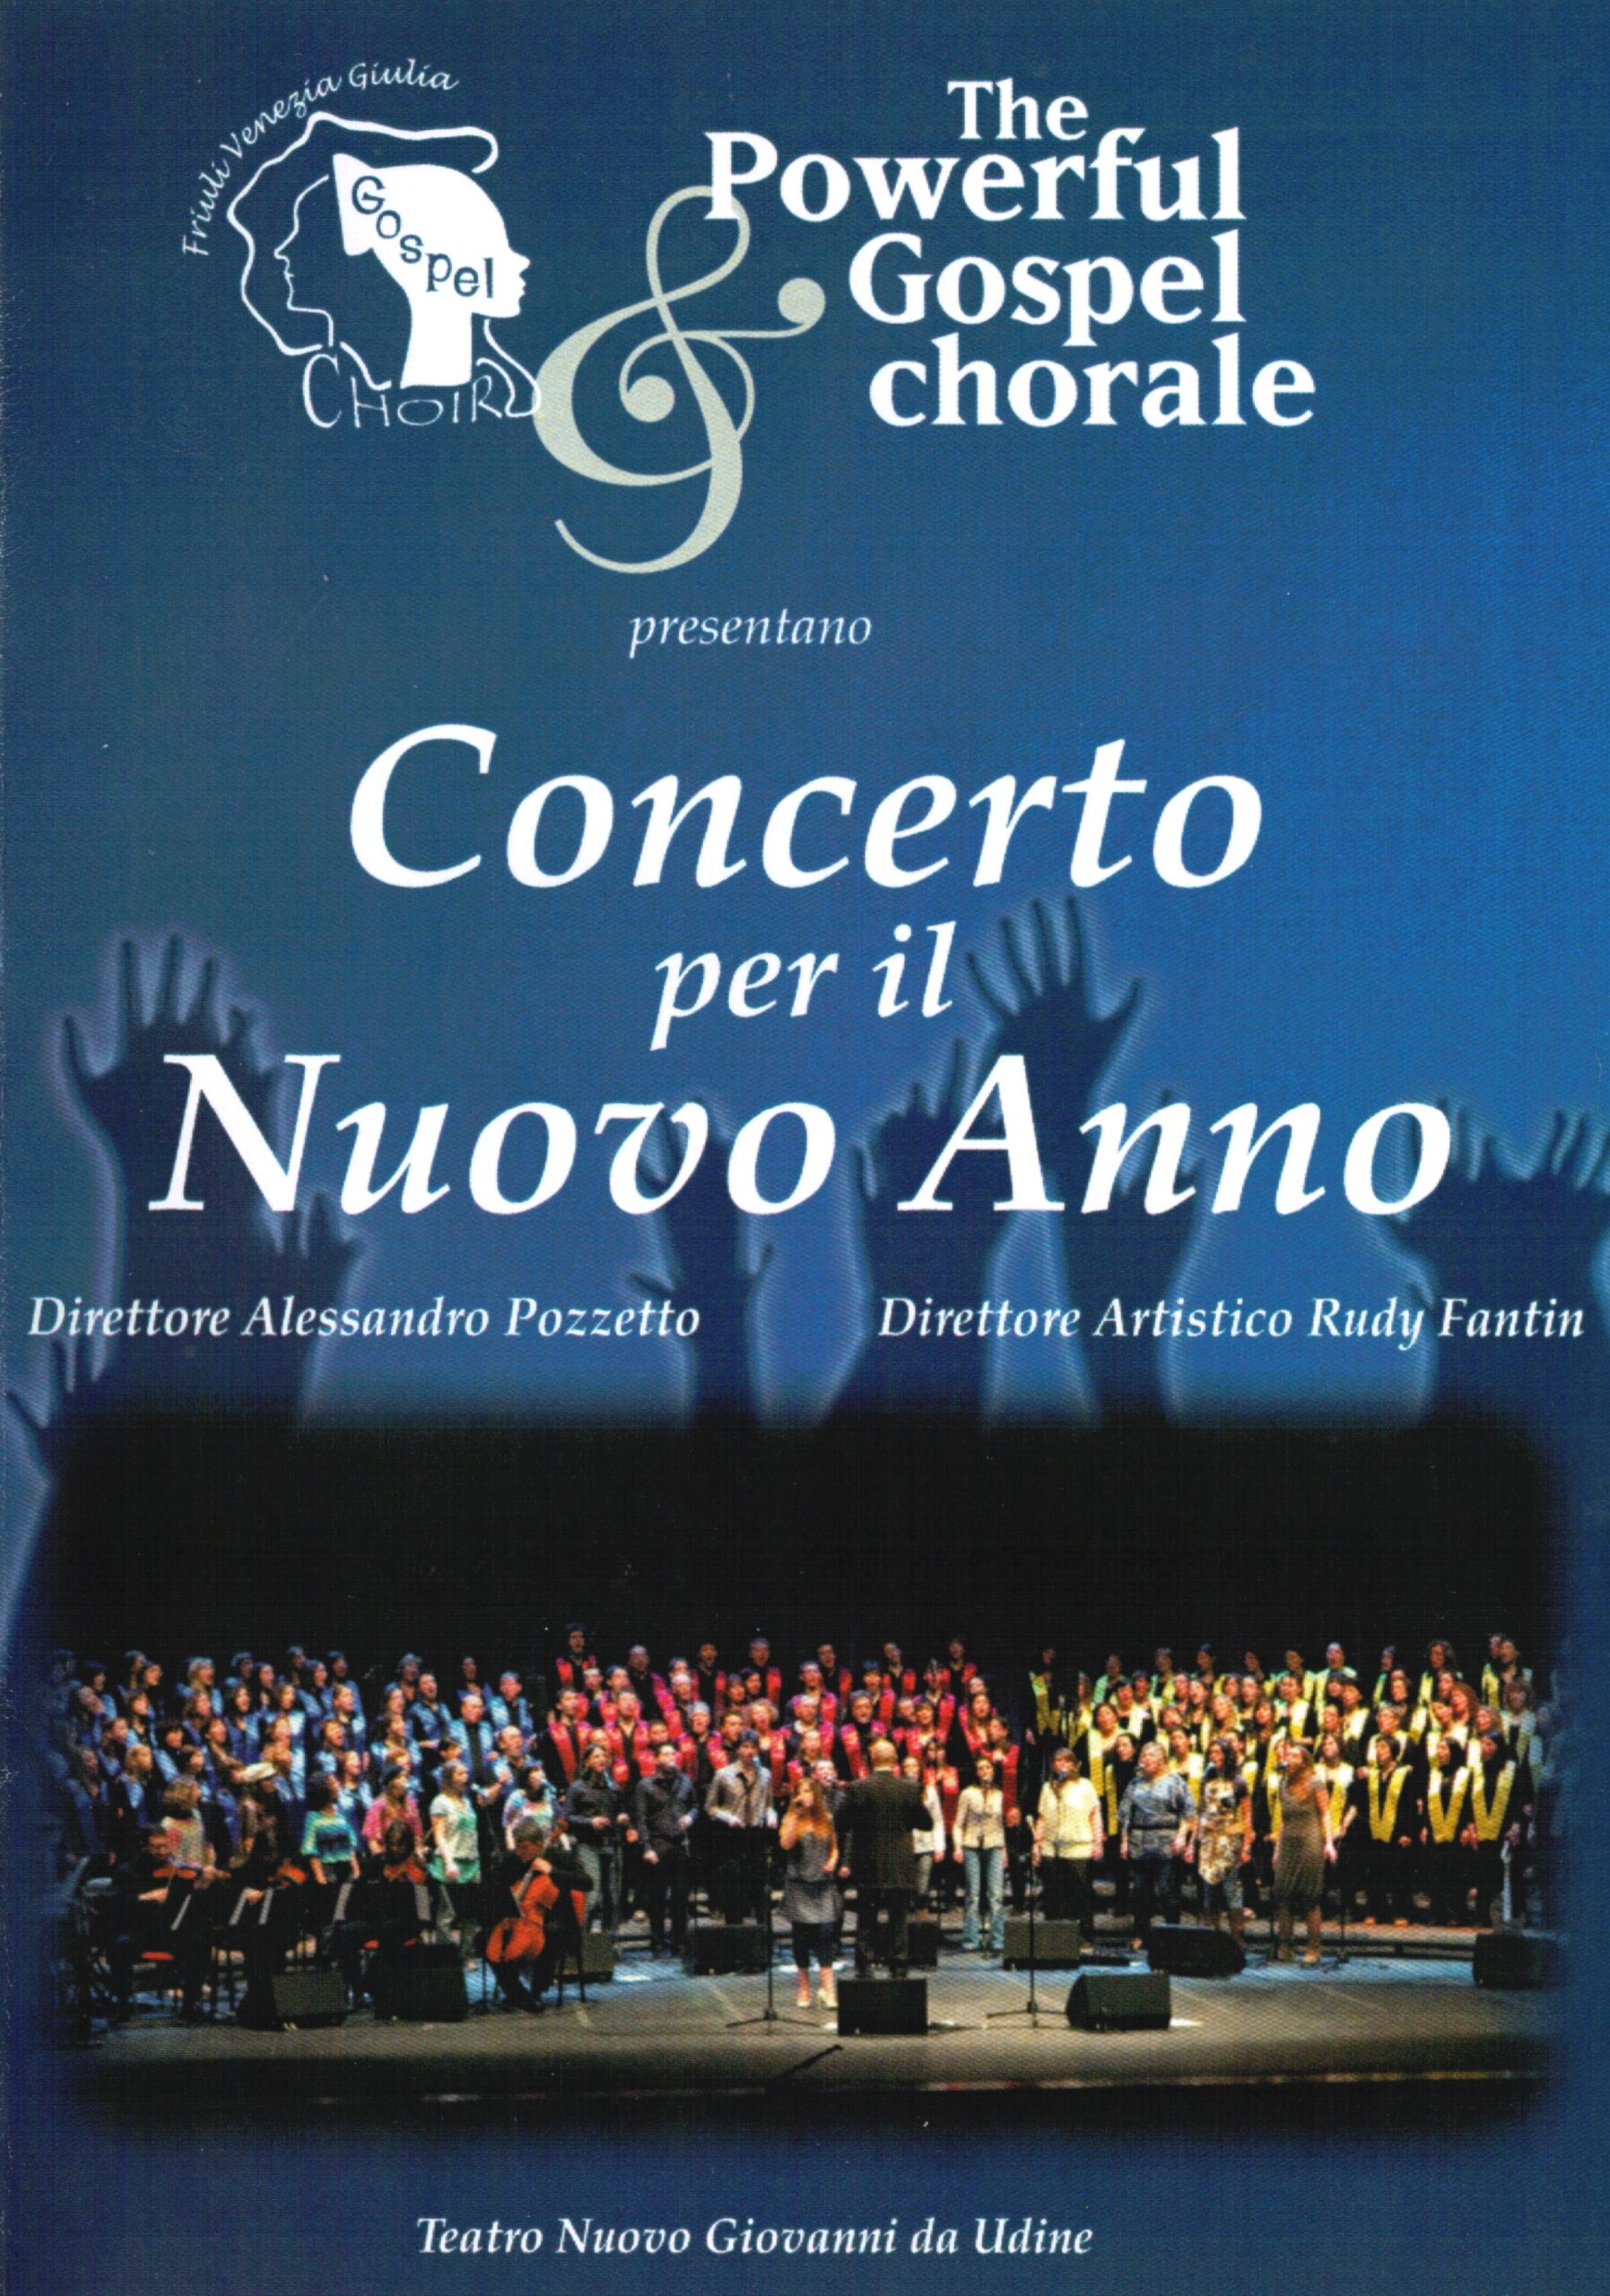 Fvg Gospel Choir & Powerful Gospel Chorale Dvd “Concerto per il Nuovo Anno”